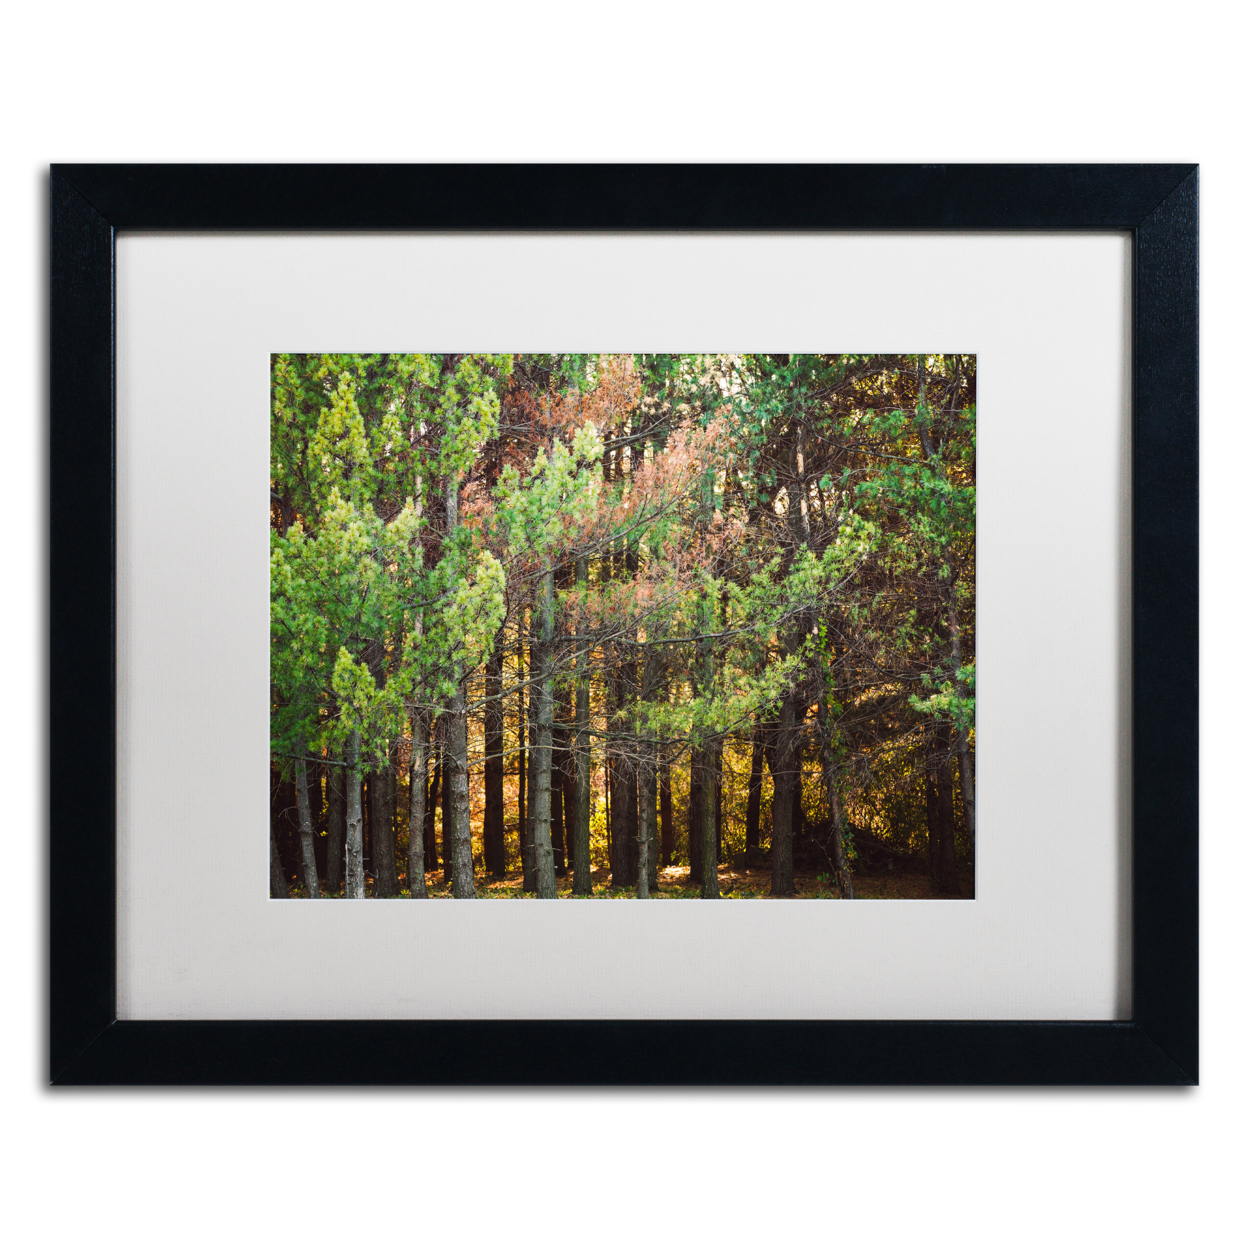 Jason Shaffer 'Summer Tree Line' Black Wooden Framed Art 18 X 22 Inches